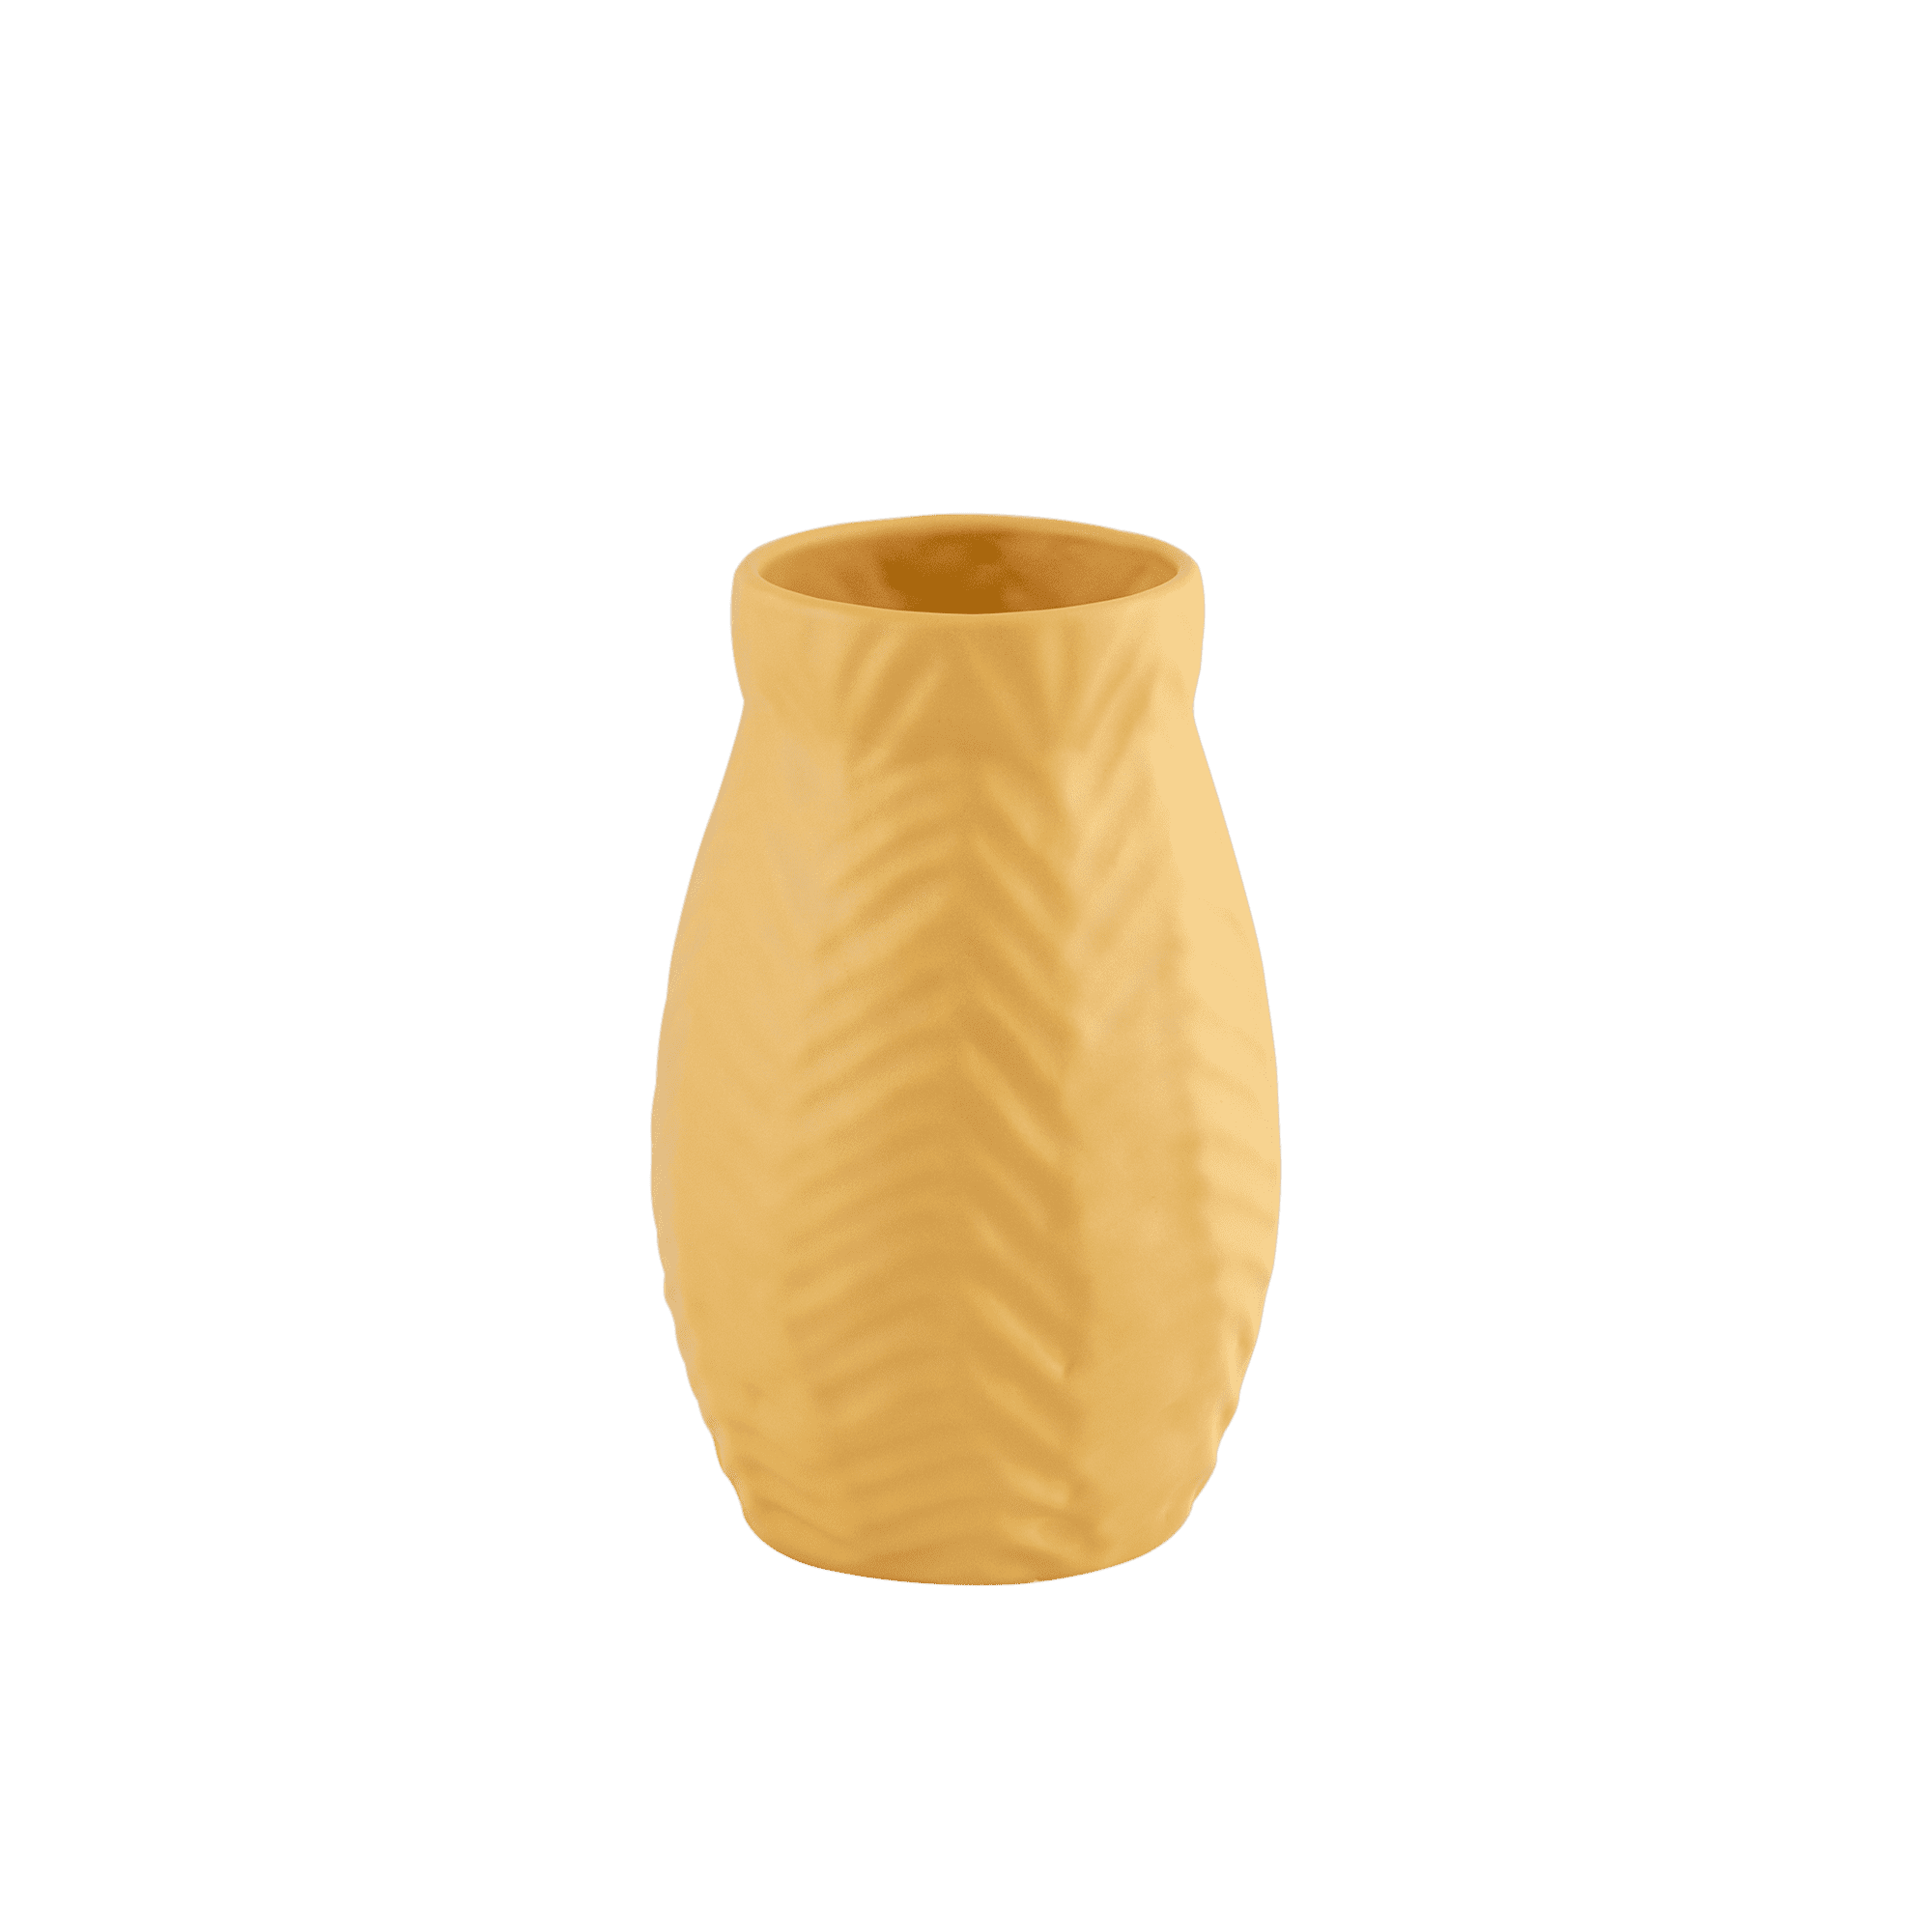 Herrinbone Vase